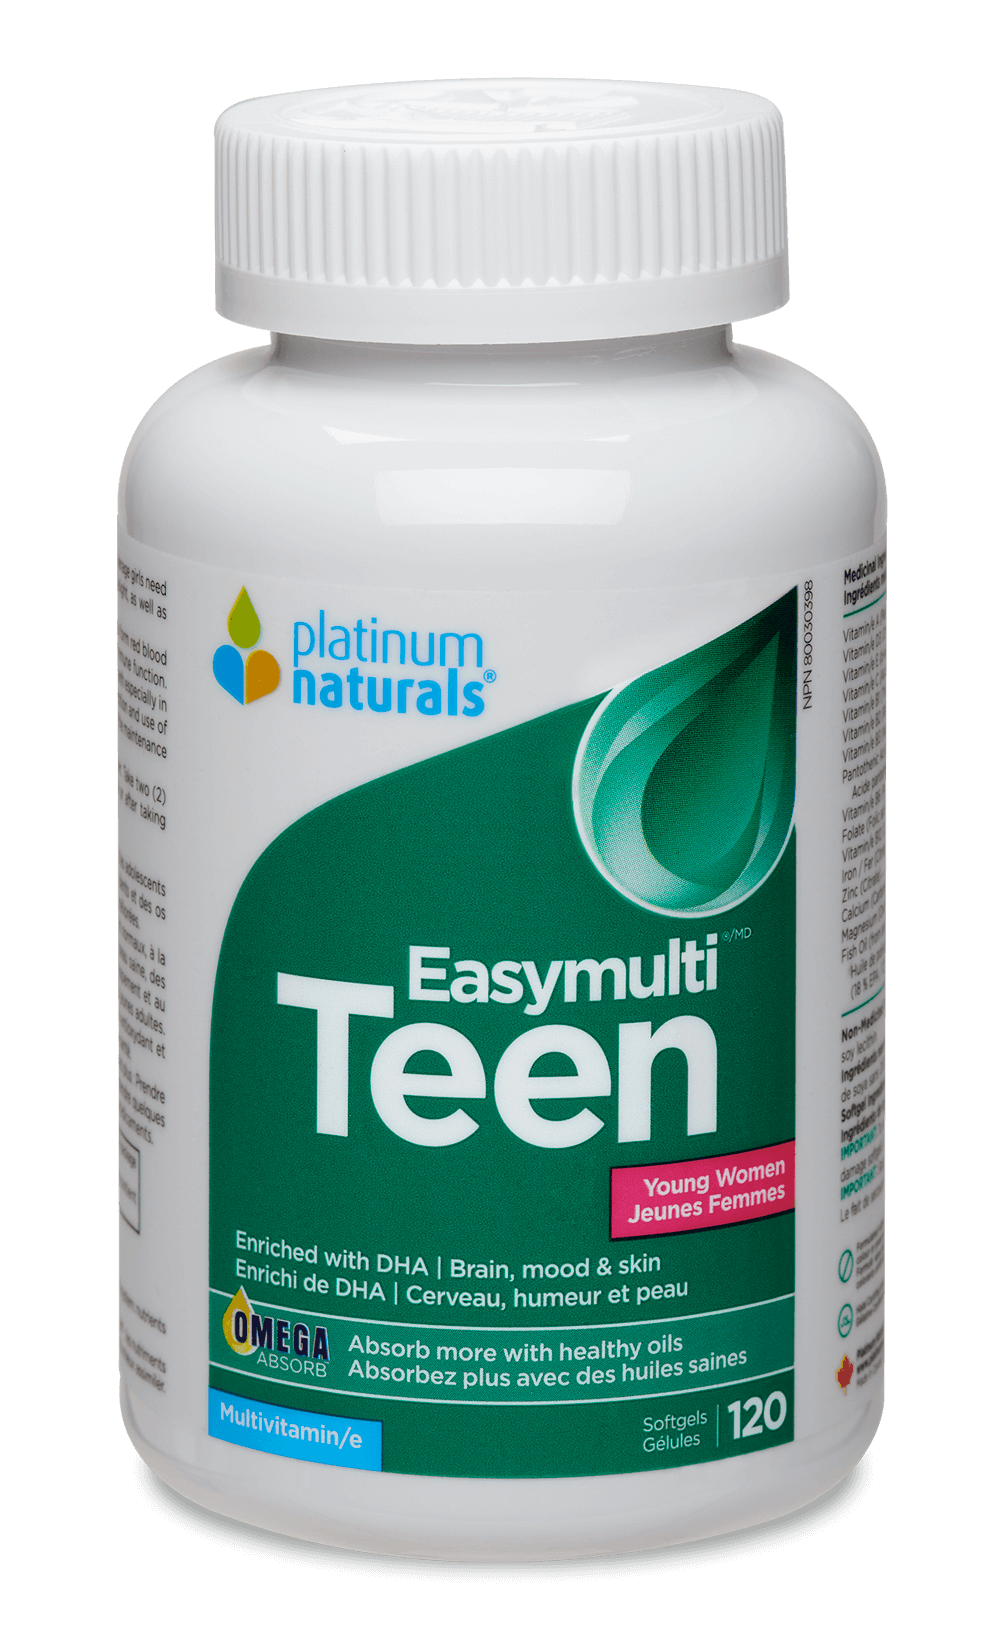 Platinum Naturals Easymulti Teen for Young Women 120 Softgels